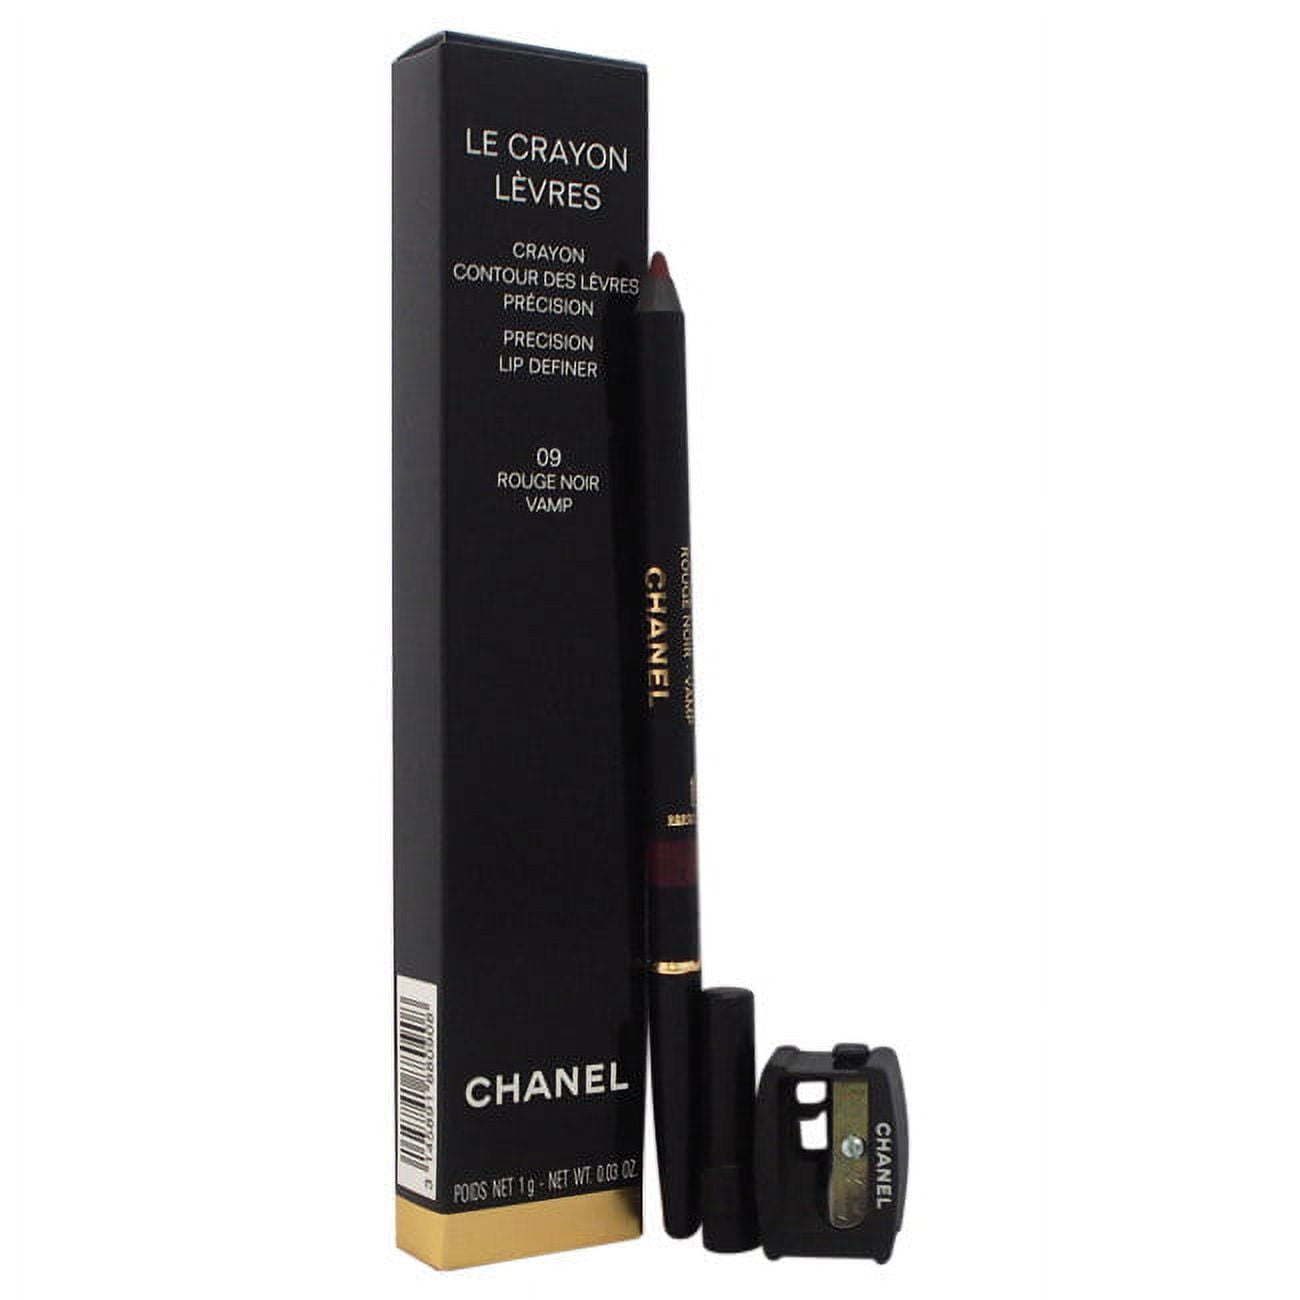 Chanel Le Crayon Levres - 09 Rouge Noir Vamp 0.03 oz Lipliner